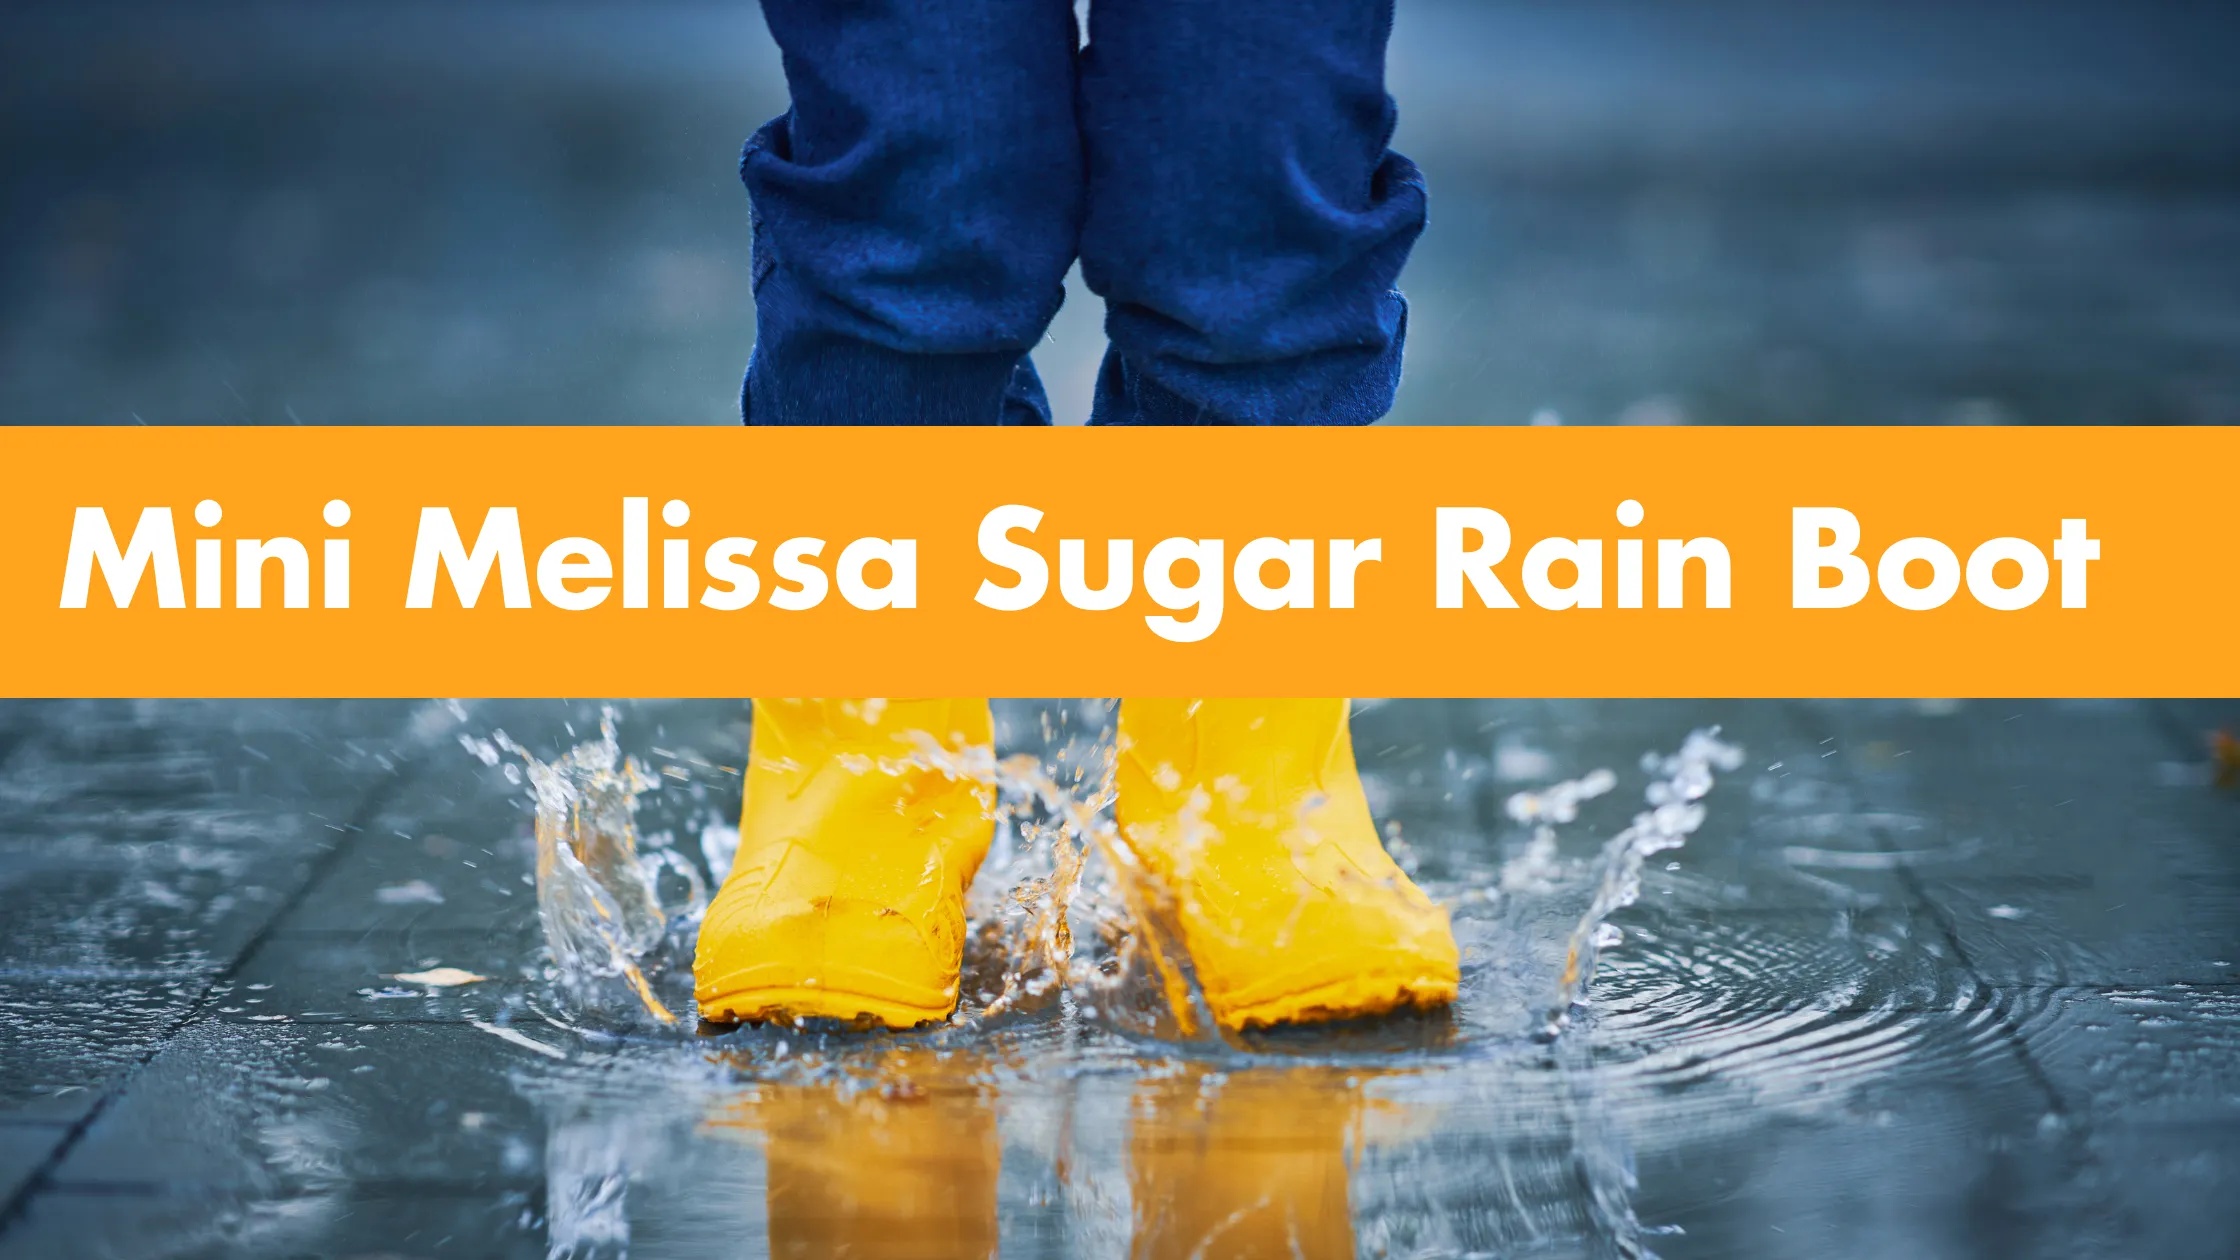 Mini Melissa Sugar Rain Boot Review